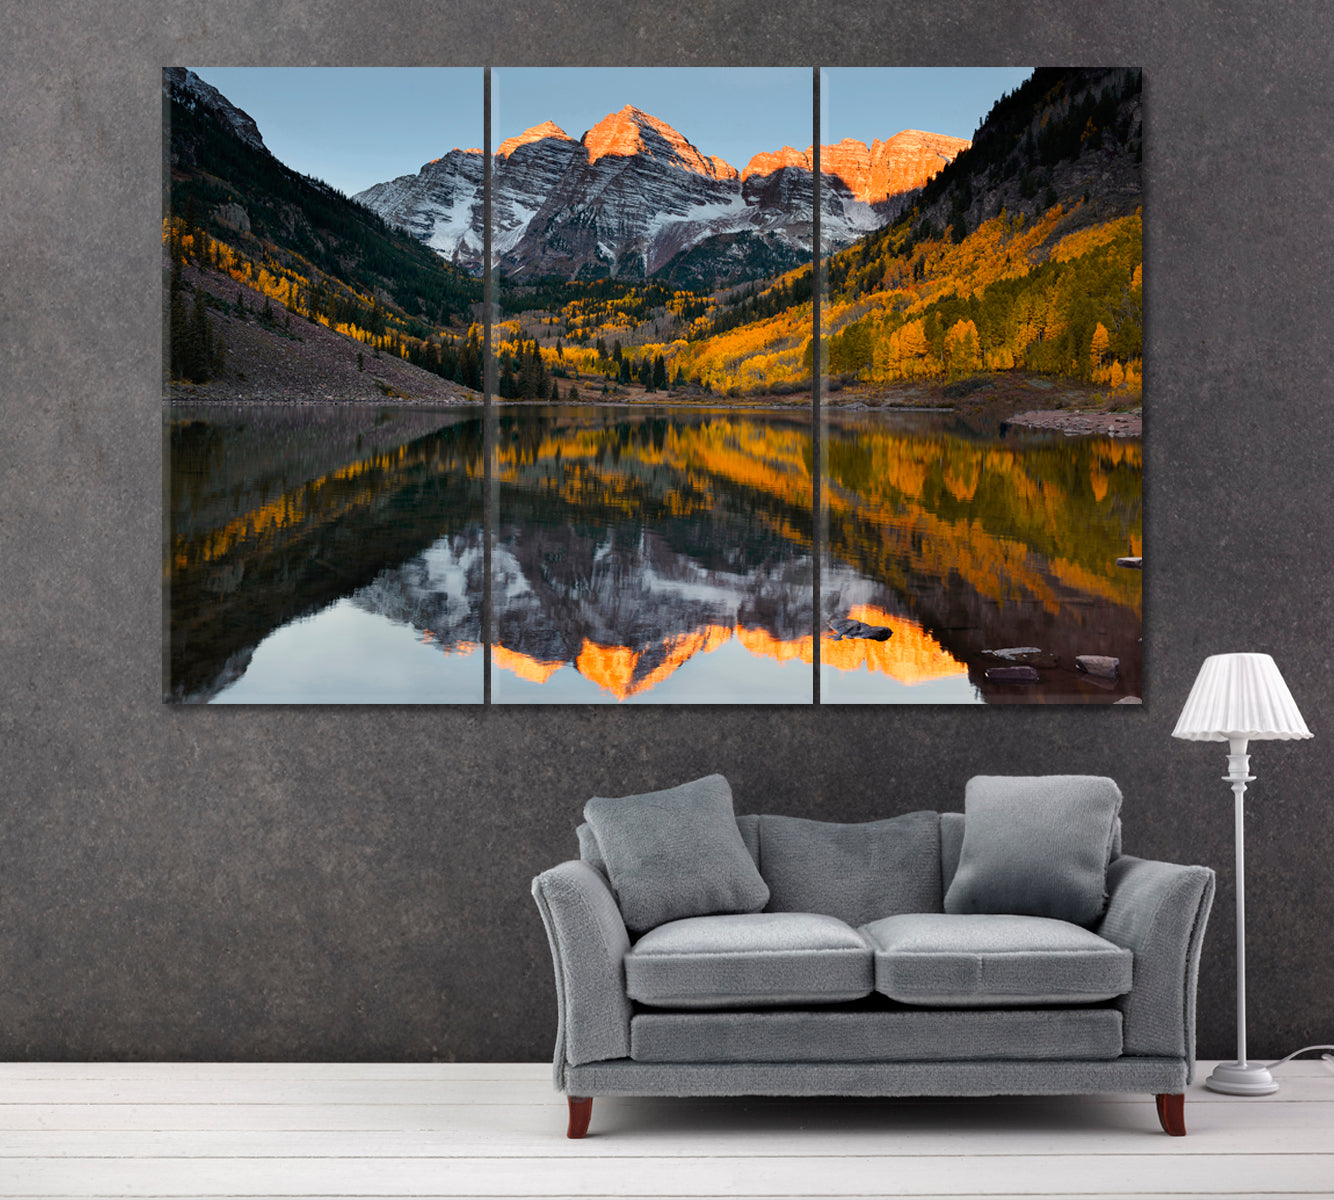 Beautiful Maroon Bells Peak and Maroon Lake in Autumn Aspen Colorado Canvas Print ArtLexy 3 Panels 36"x24" inches 